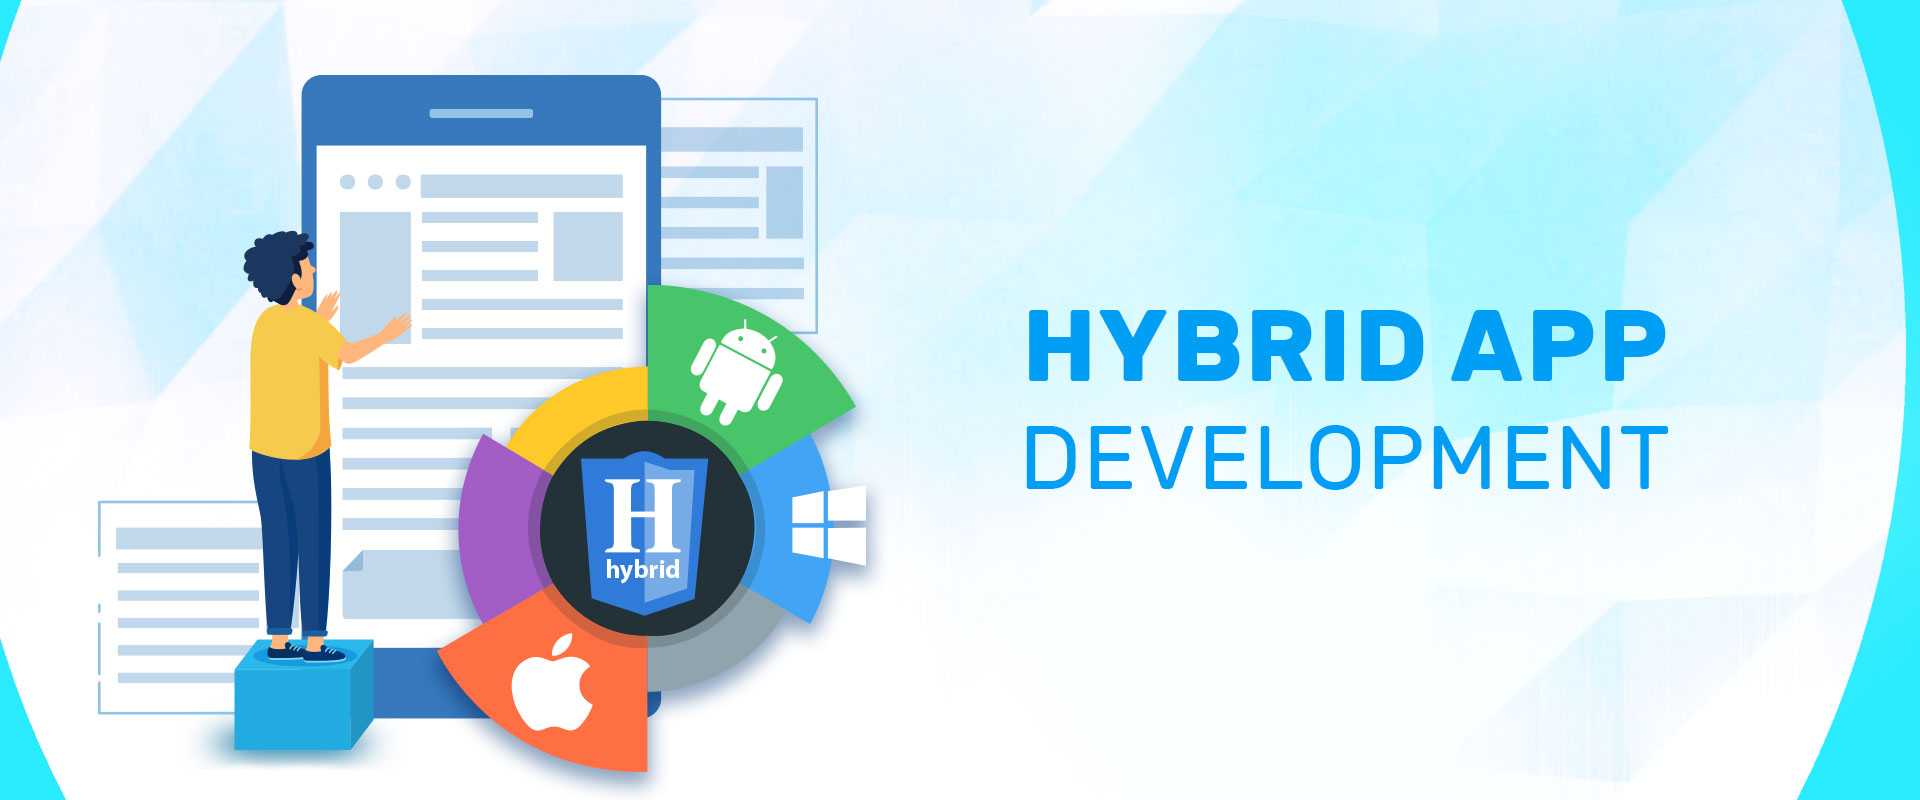 Hybrid App Development in Noida Promotes Business Internationally